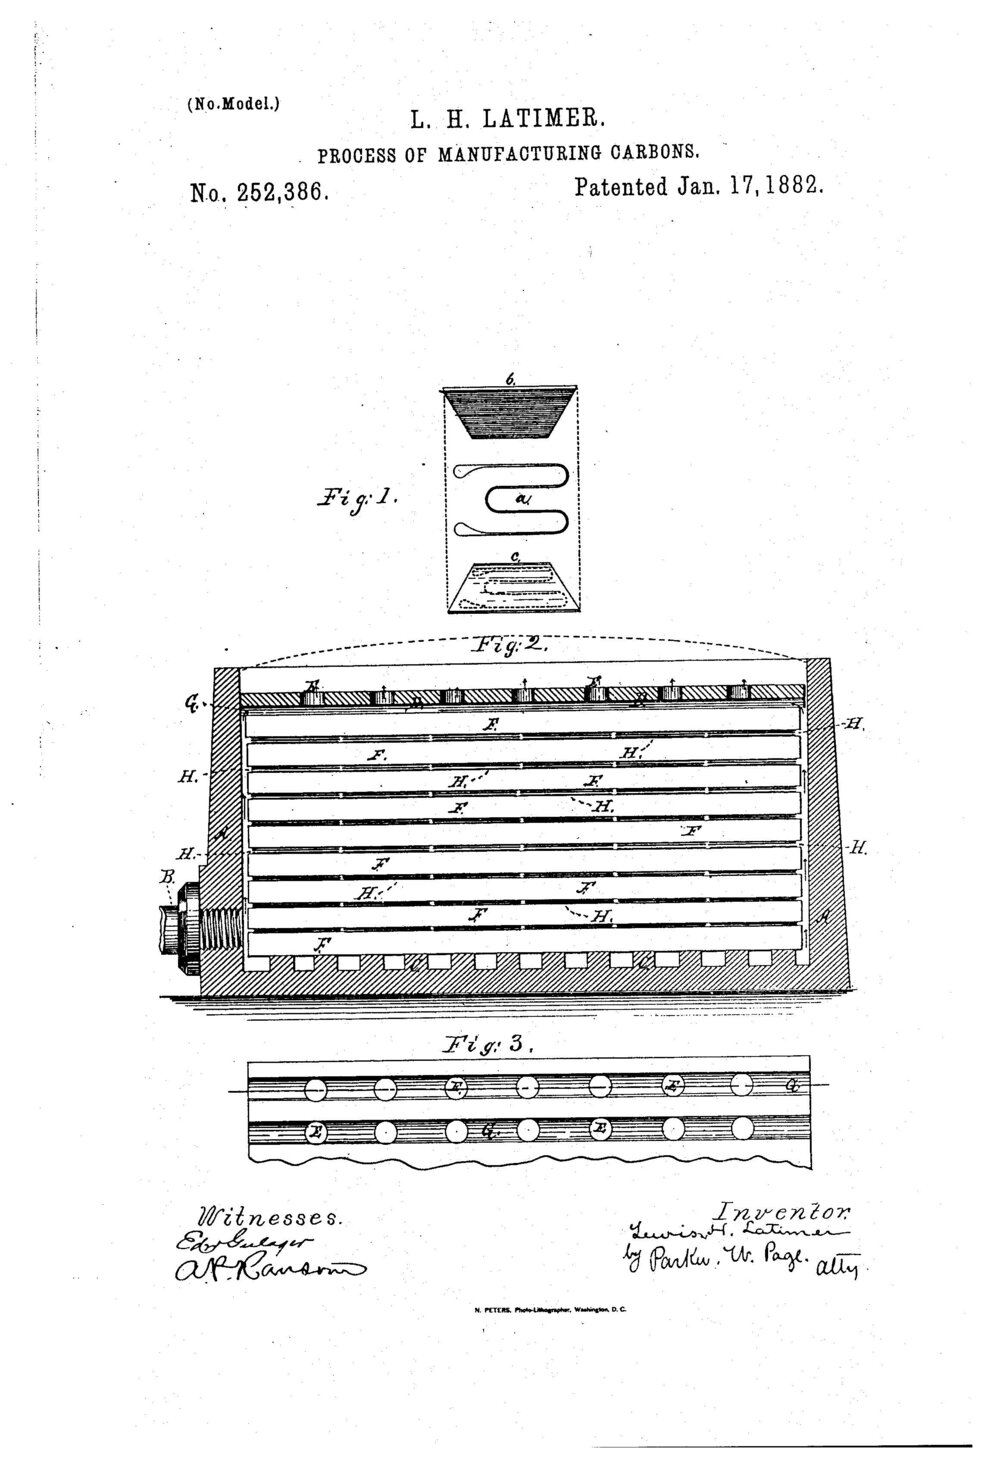 Patent draft illustration of Latimer's carbon filament process.